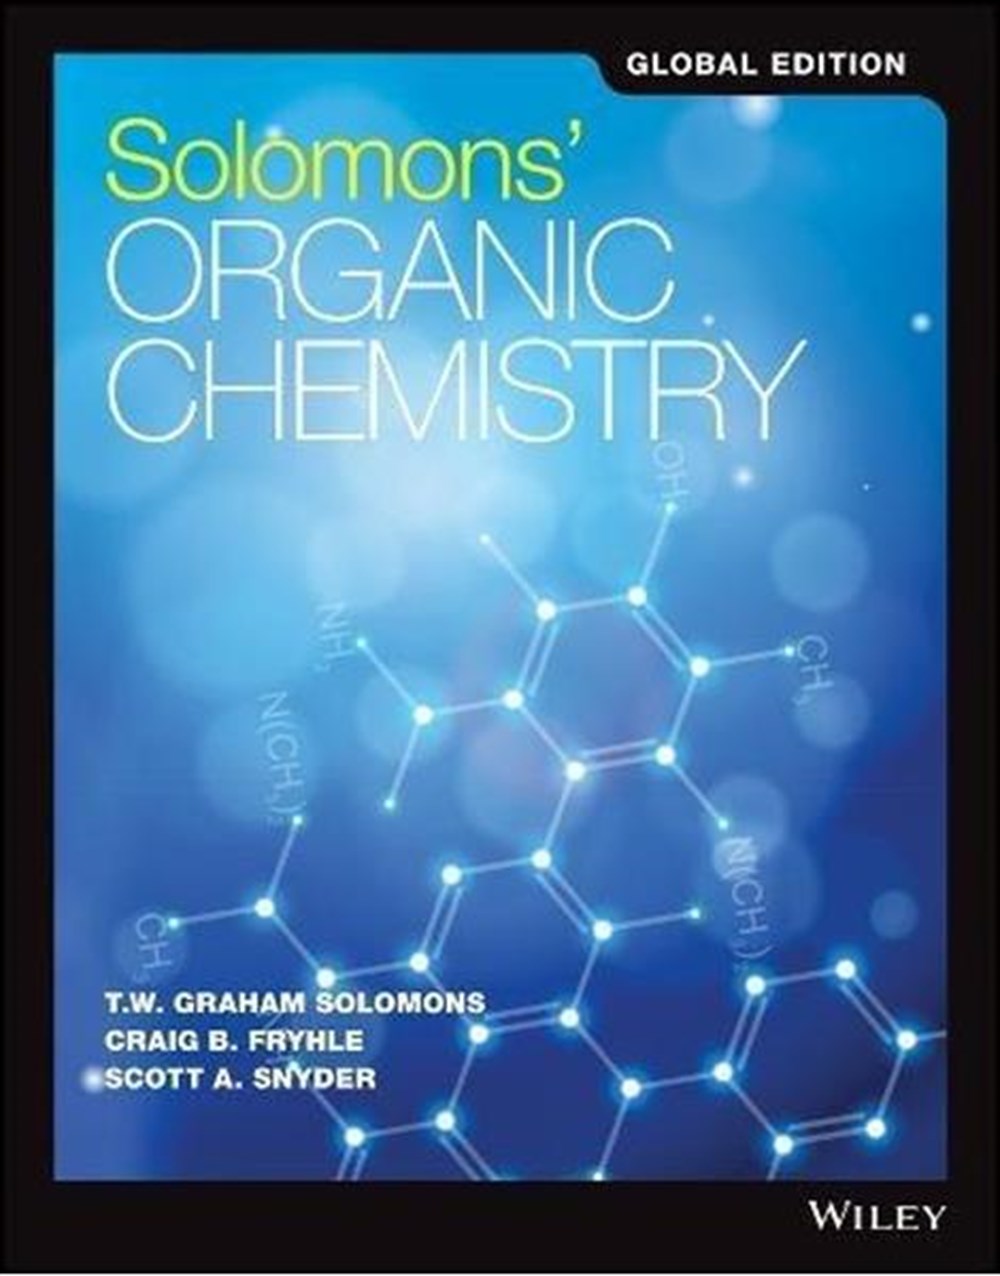 UP81-009 John Wiley & Sons Inc Solomons' Organic Chemistry 2016 T. W. Graham Solomons 40RaD